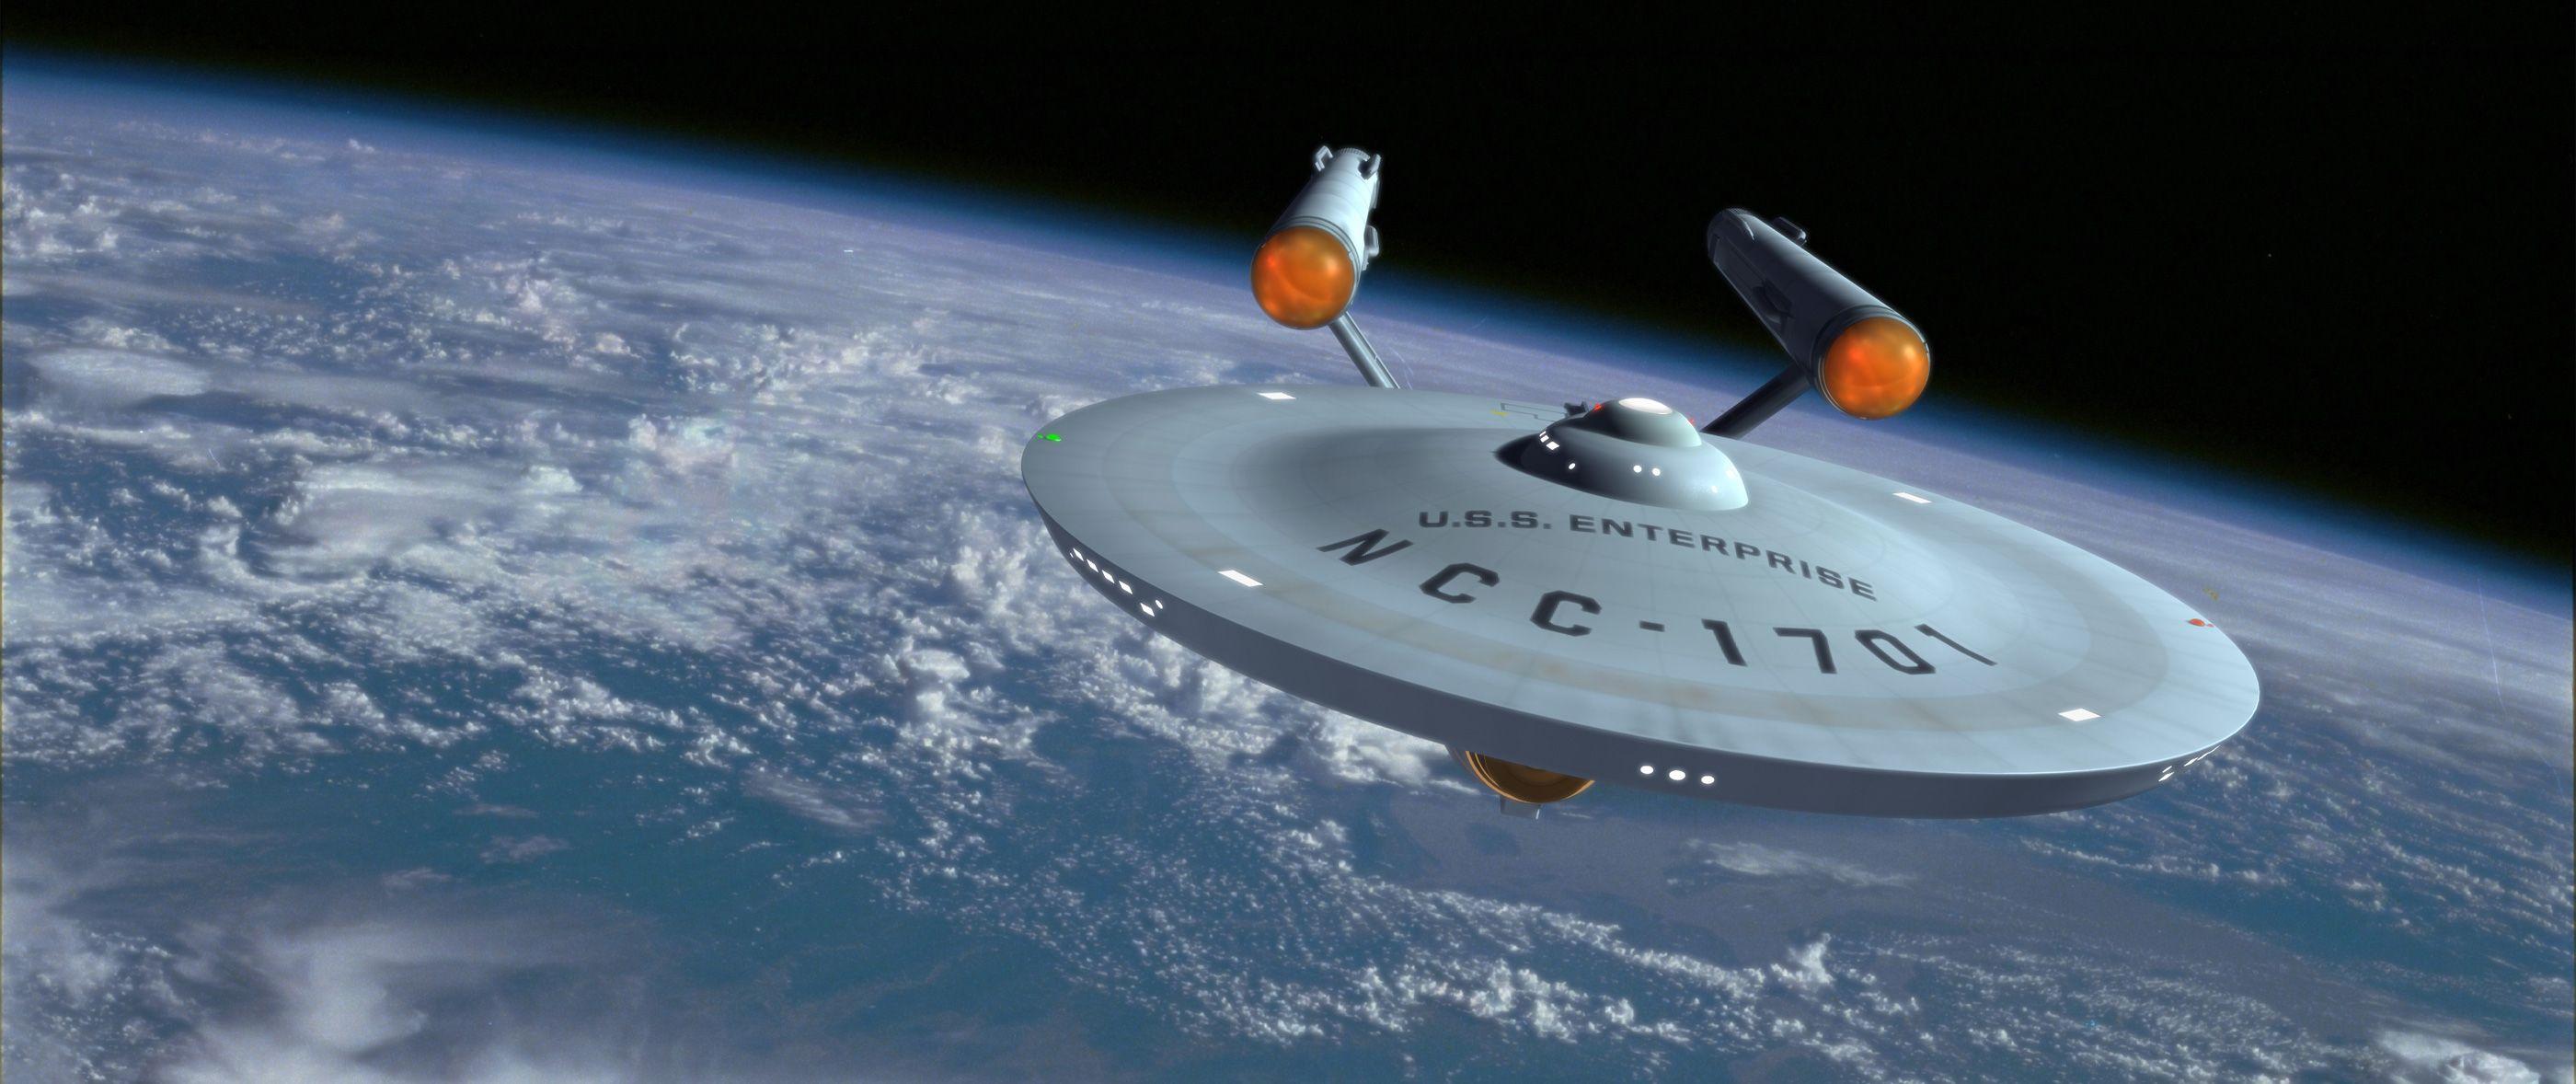 Star Trek USS Enterprise NCC 1701 Wallpaper (google.image) 03.18